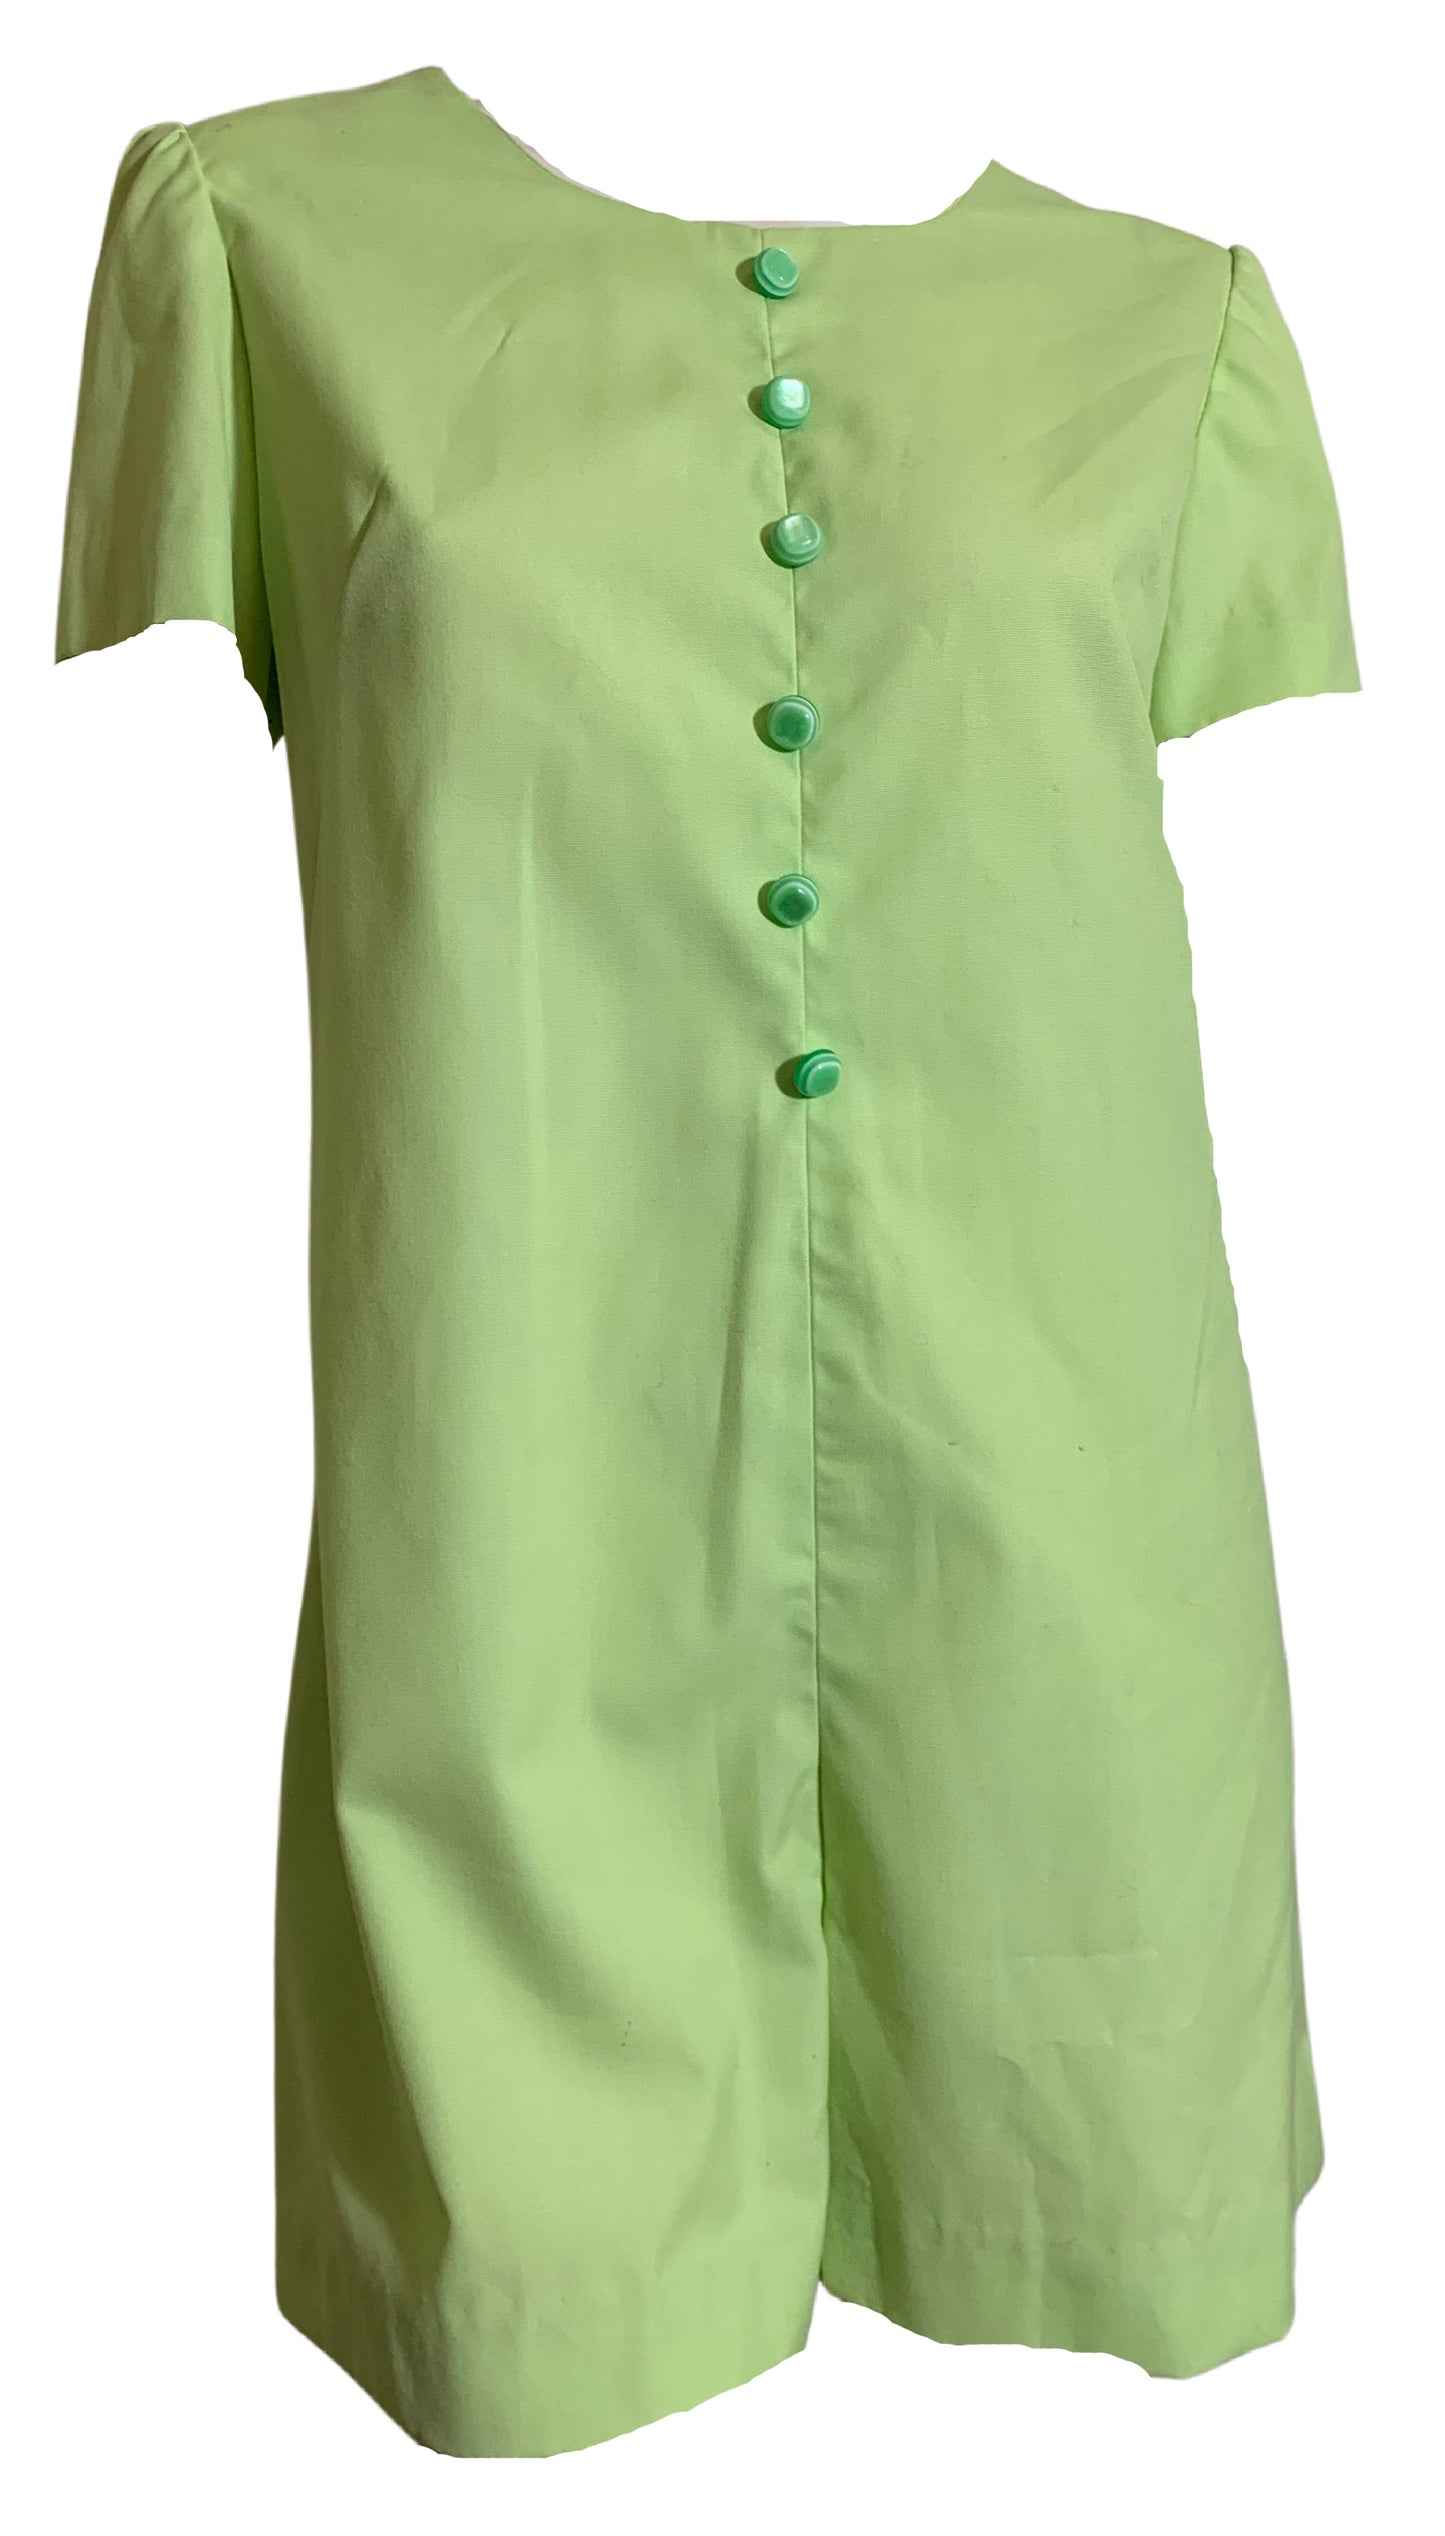 Bright Mint Green Cotton Jumper circa 1960s